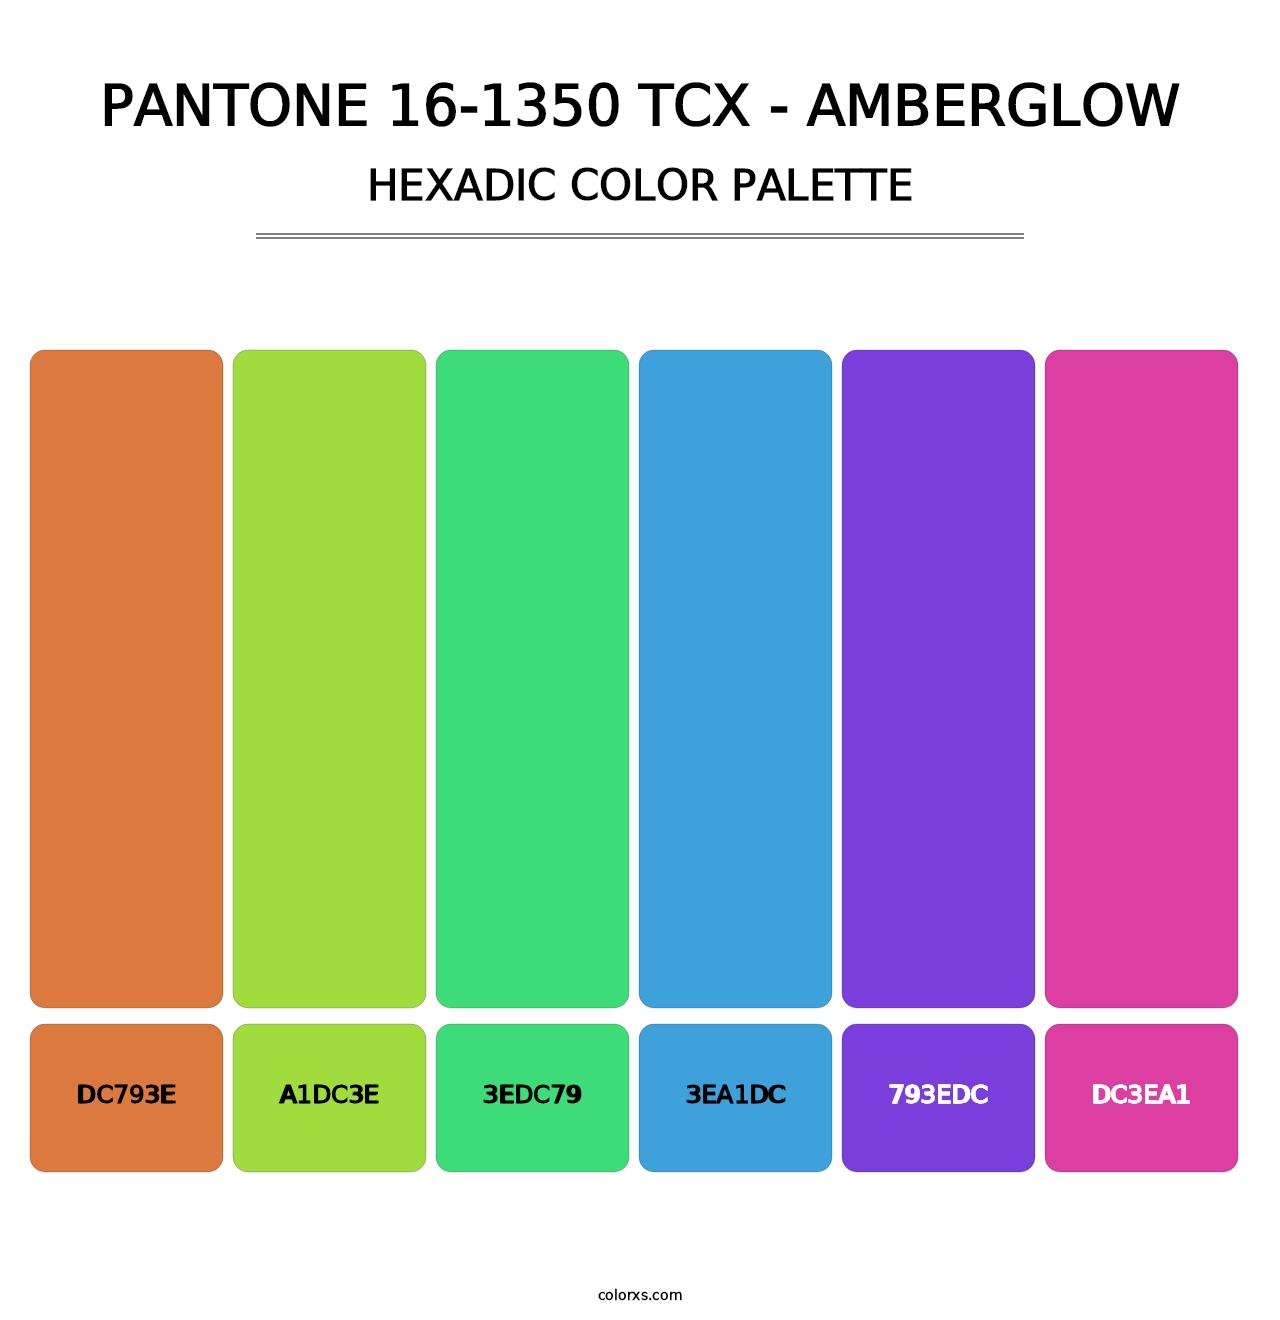 PANTONE 16-1350 TCX - Amberglow - Hexadic Color Palette